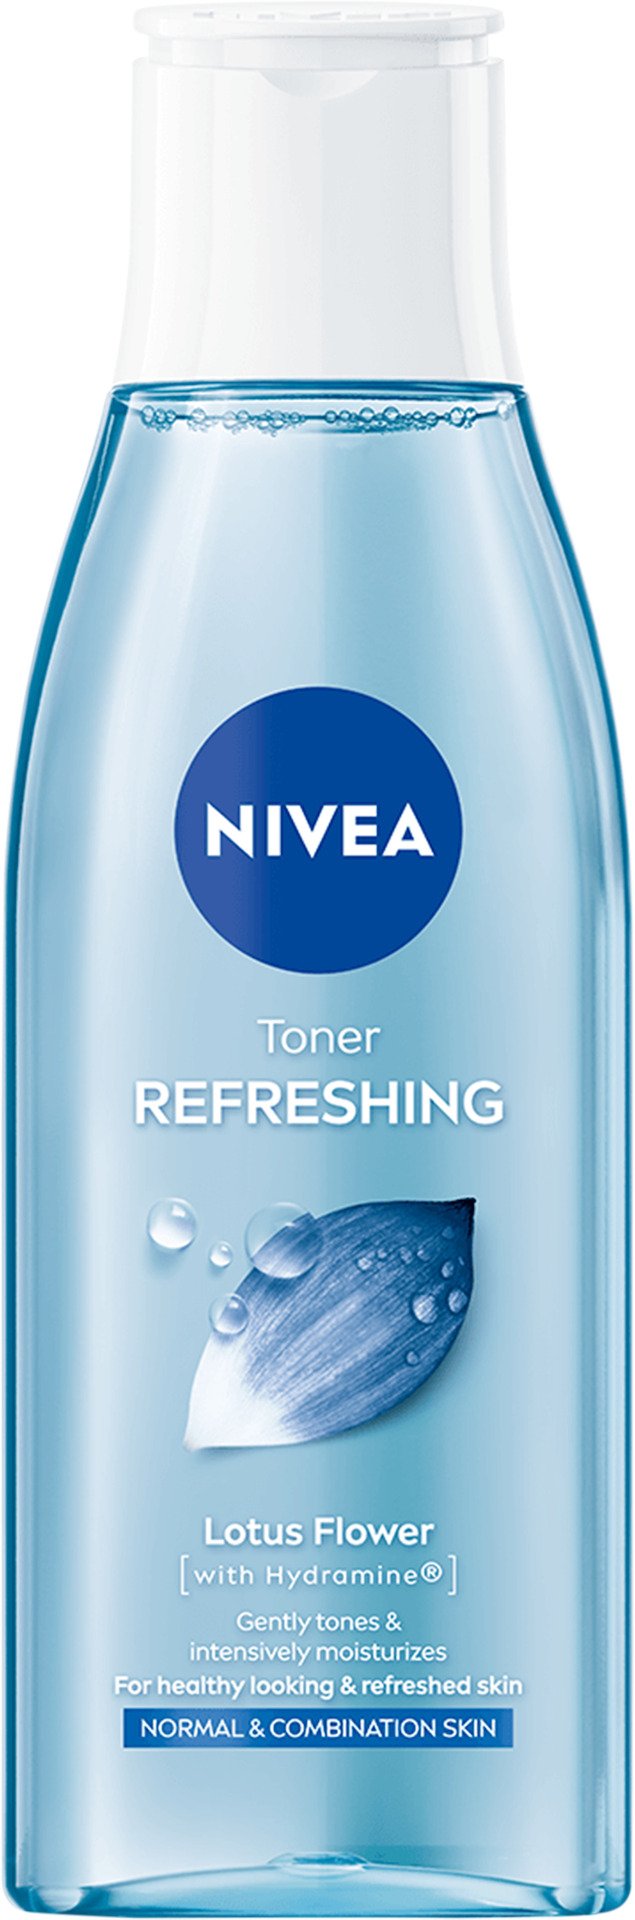 NIVEA Refreshing Toner Normal & Combination Skin 200 ml